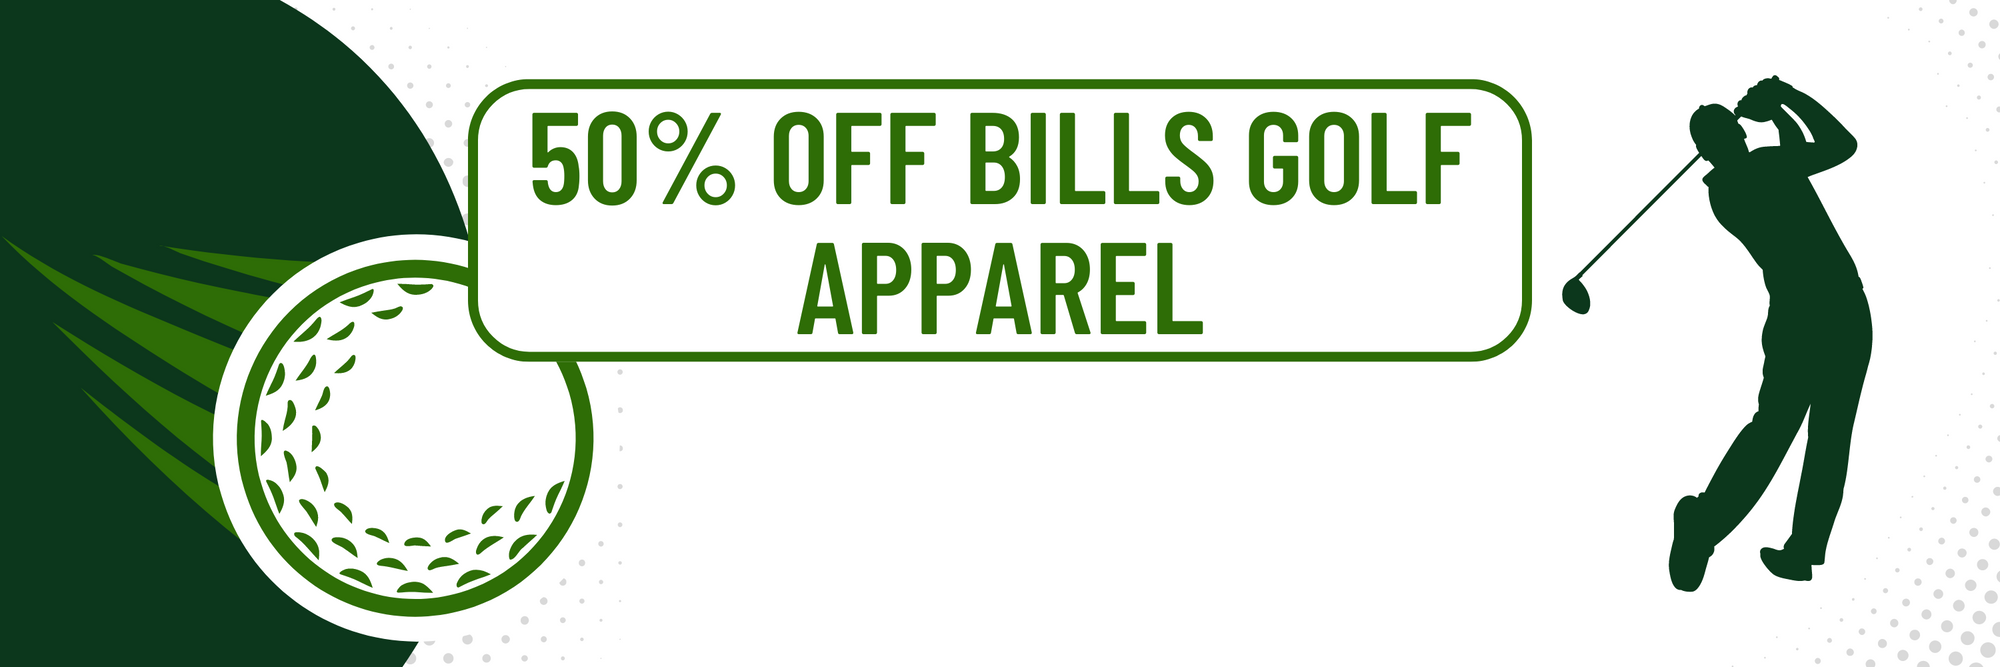 50% off bills golf apparel graphic